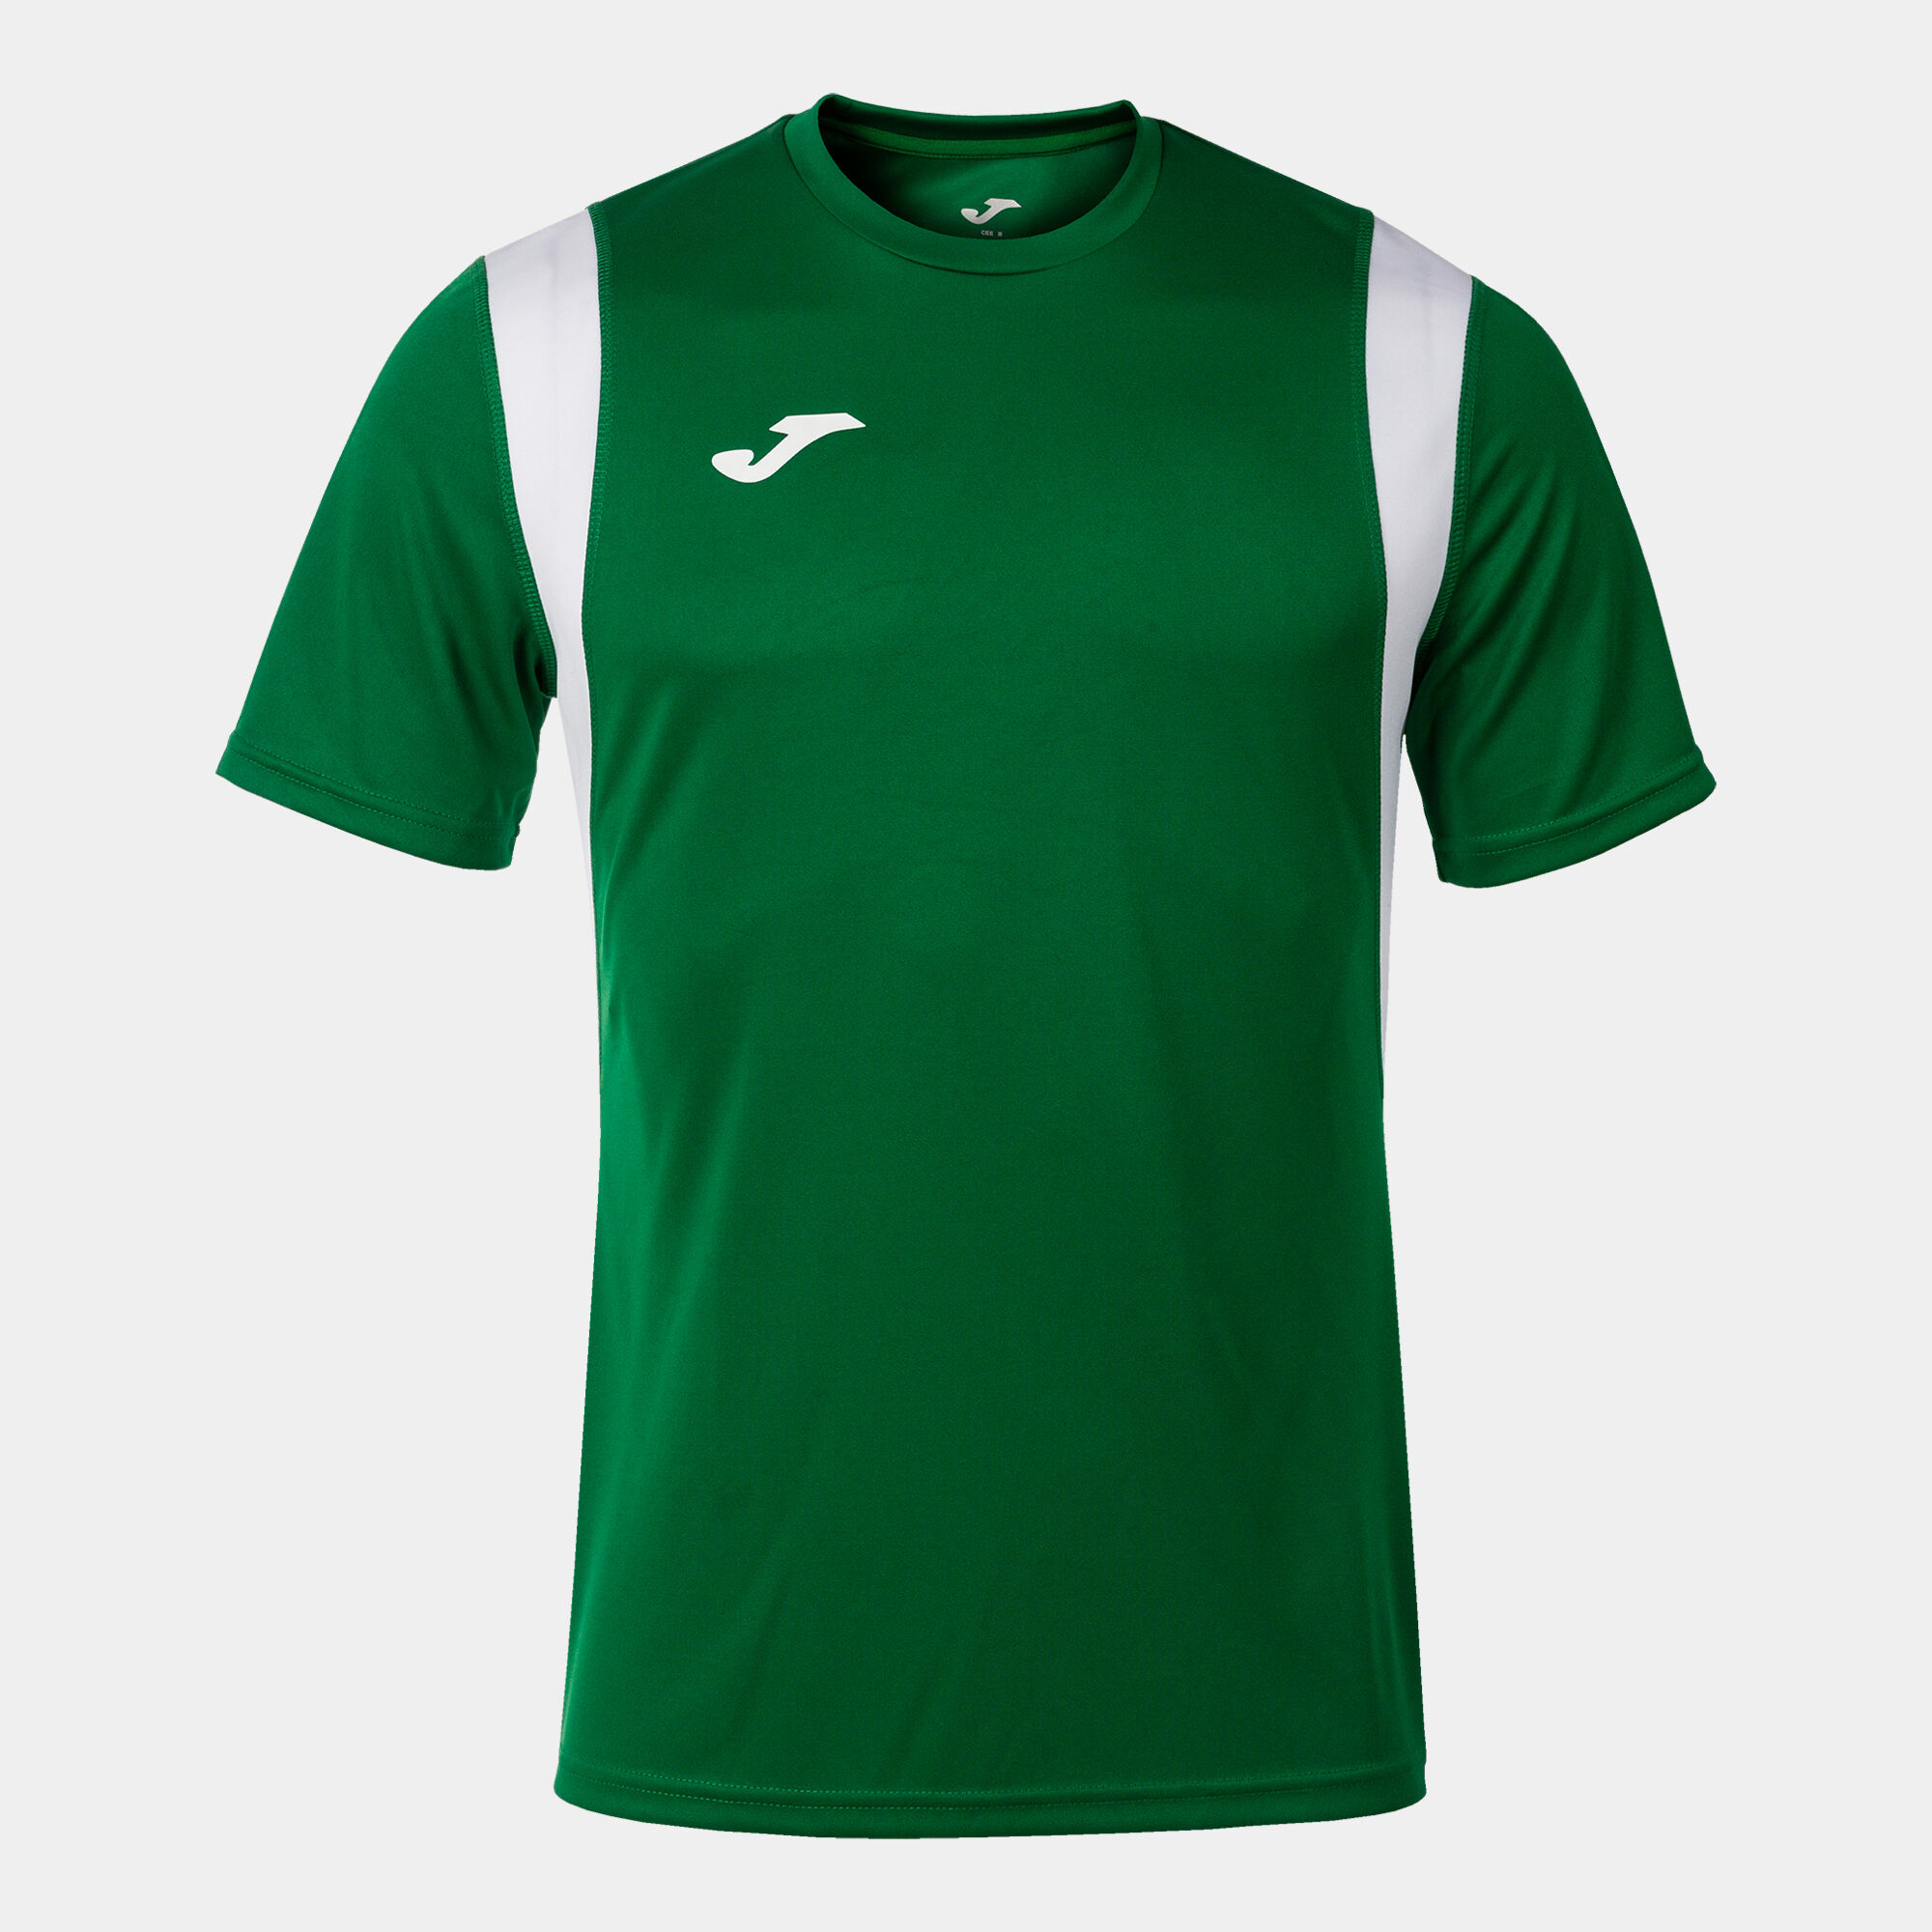 Camiseta manga corta hombre Dinamo verde